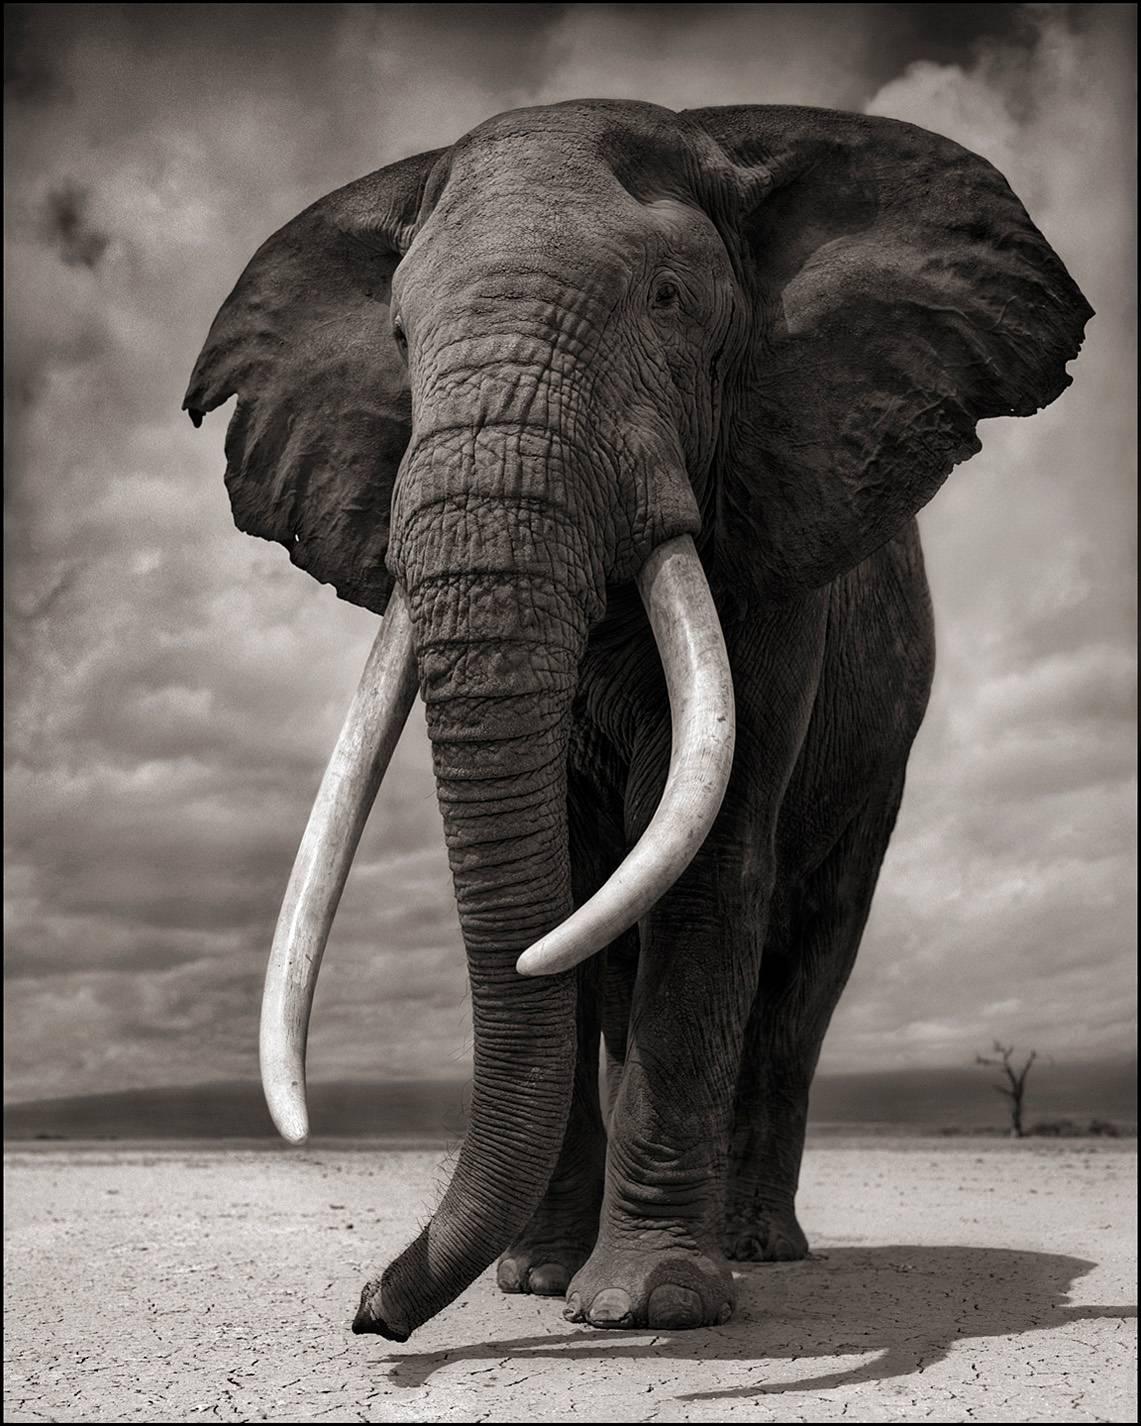 Elephant on Bare Earth, Amboseli - Photograph by Nick Brandt